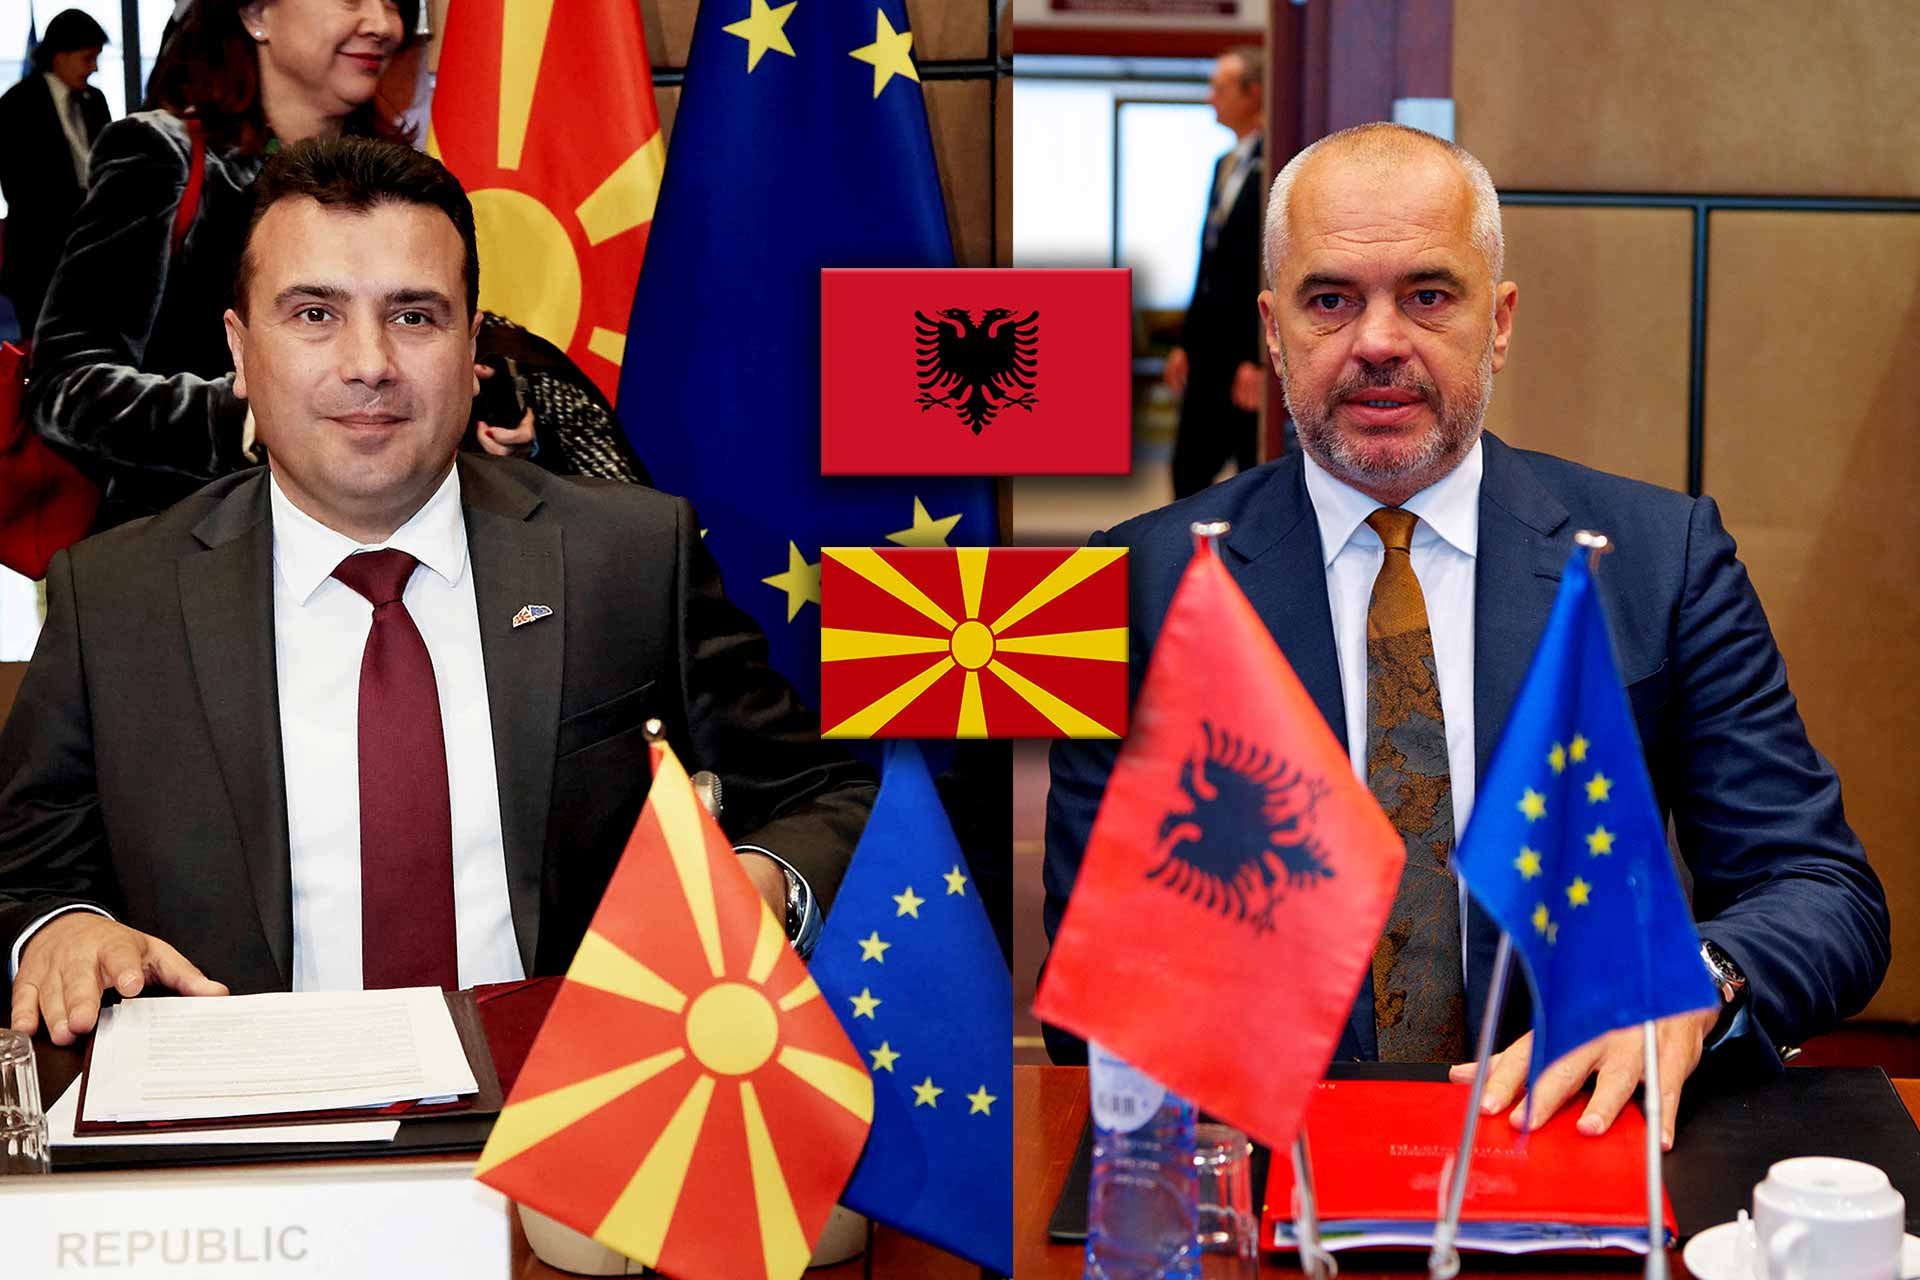 Albania and North Macedonia